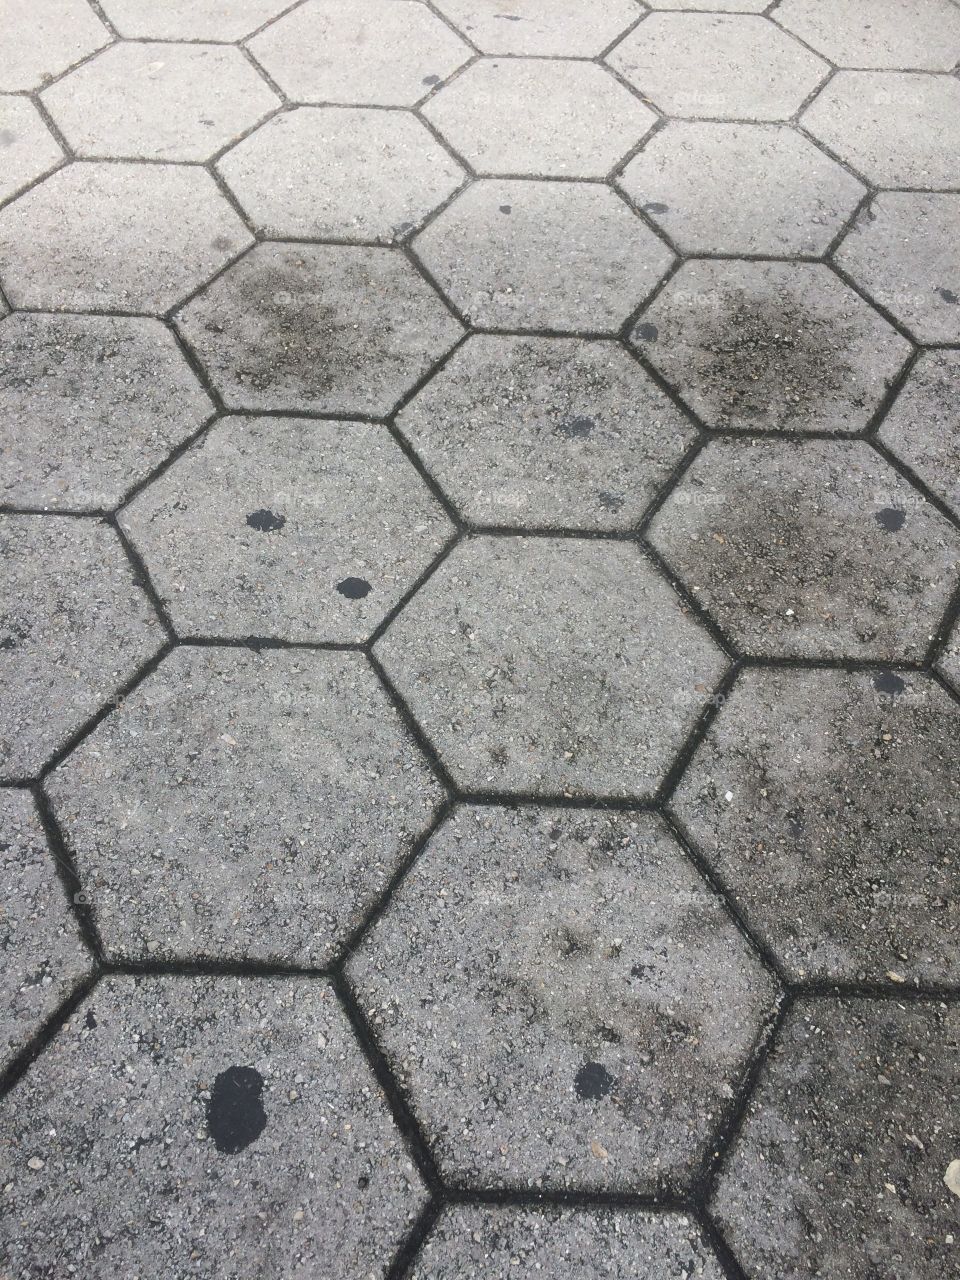 Tar spots on cobblestone 